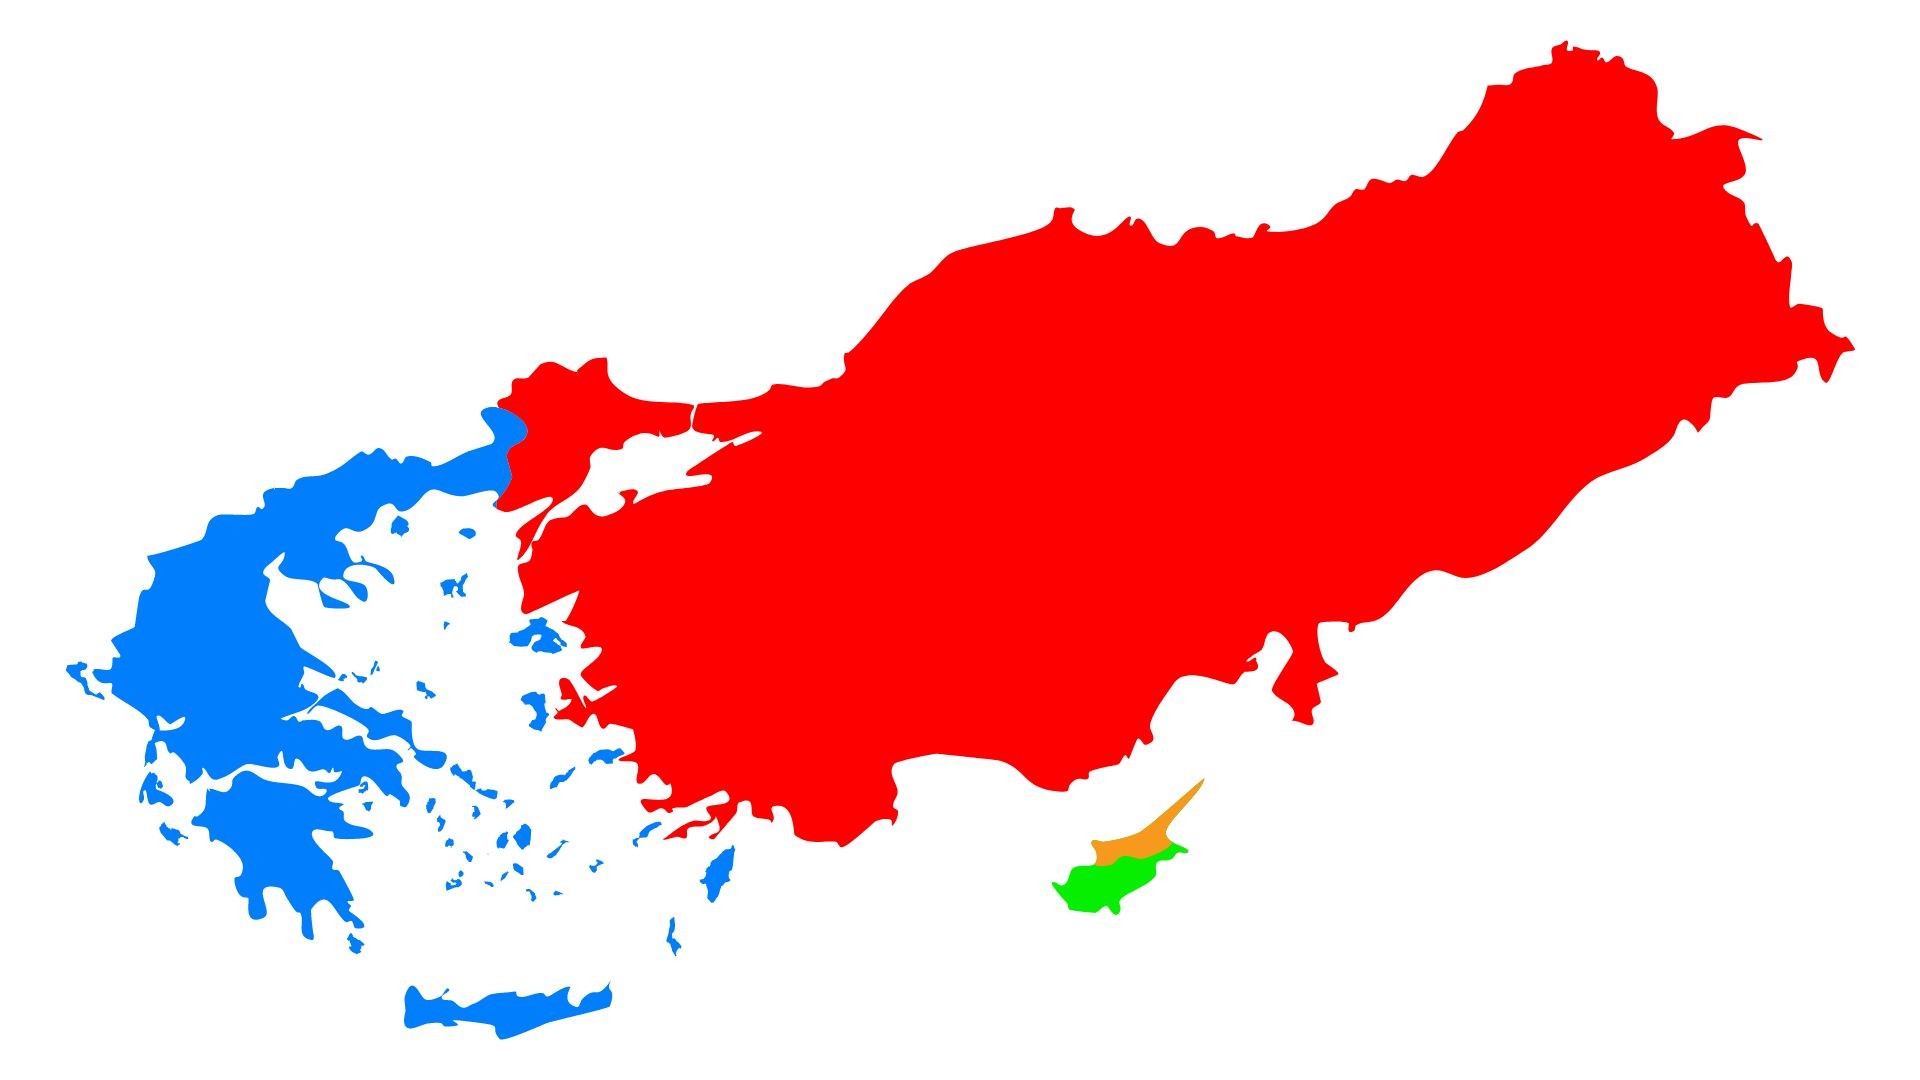 Turkey and Greece